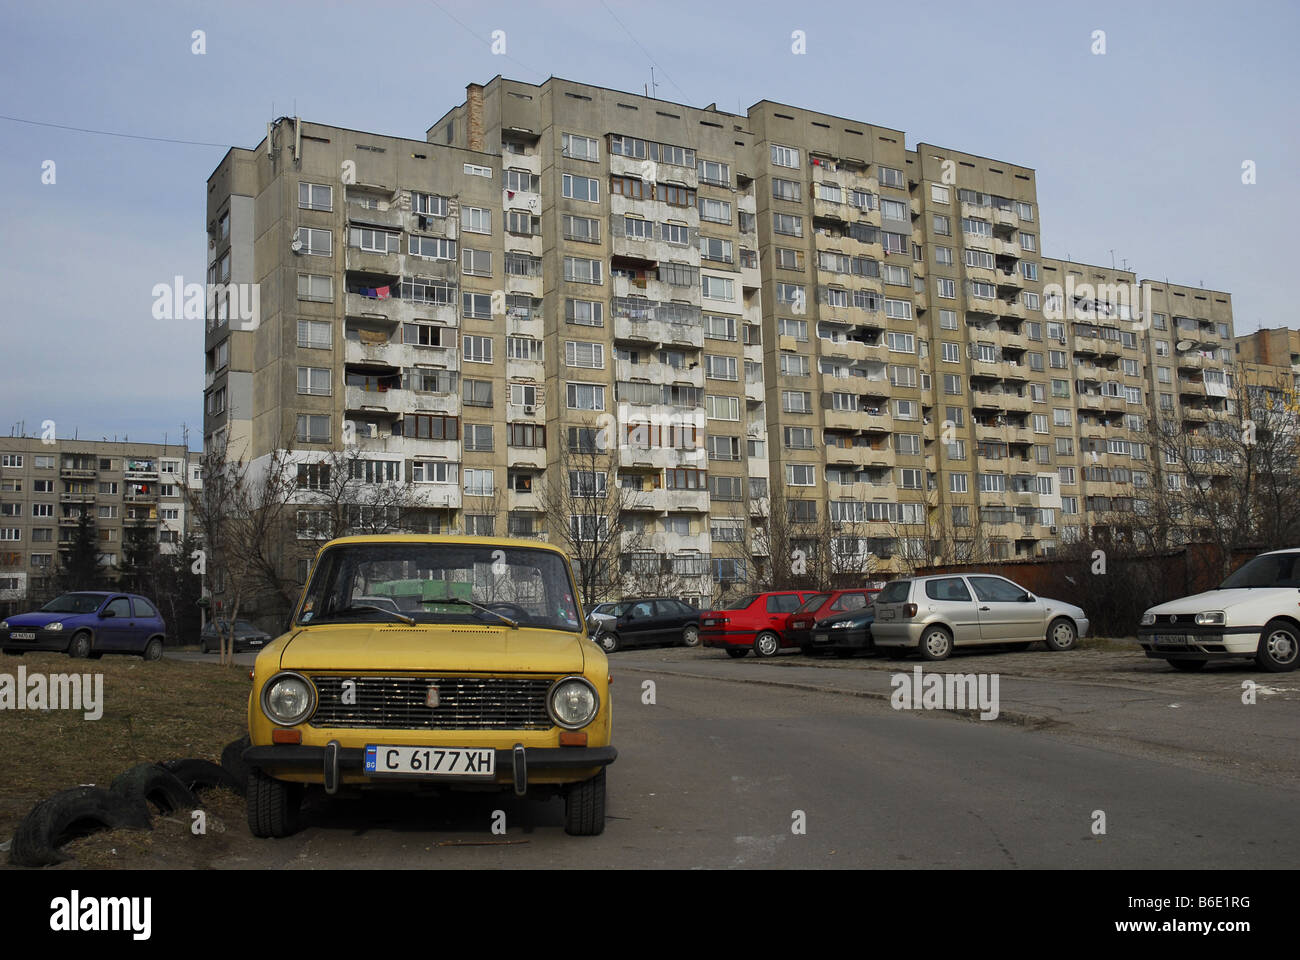 Mladost (Youth) quarter, Sofia, Bulgaria Stock Photo